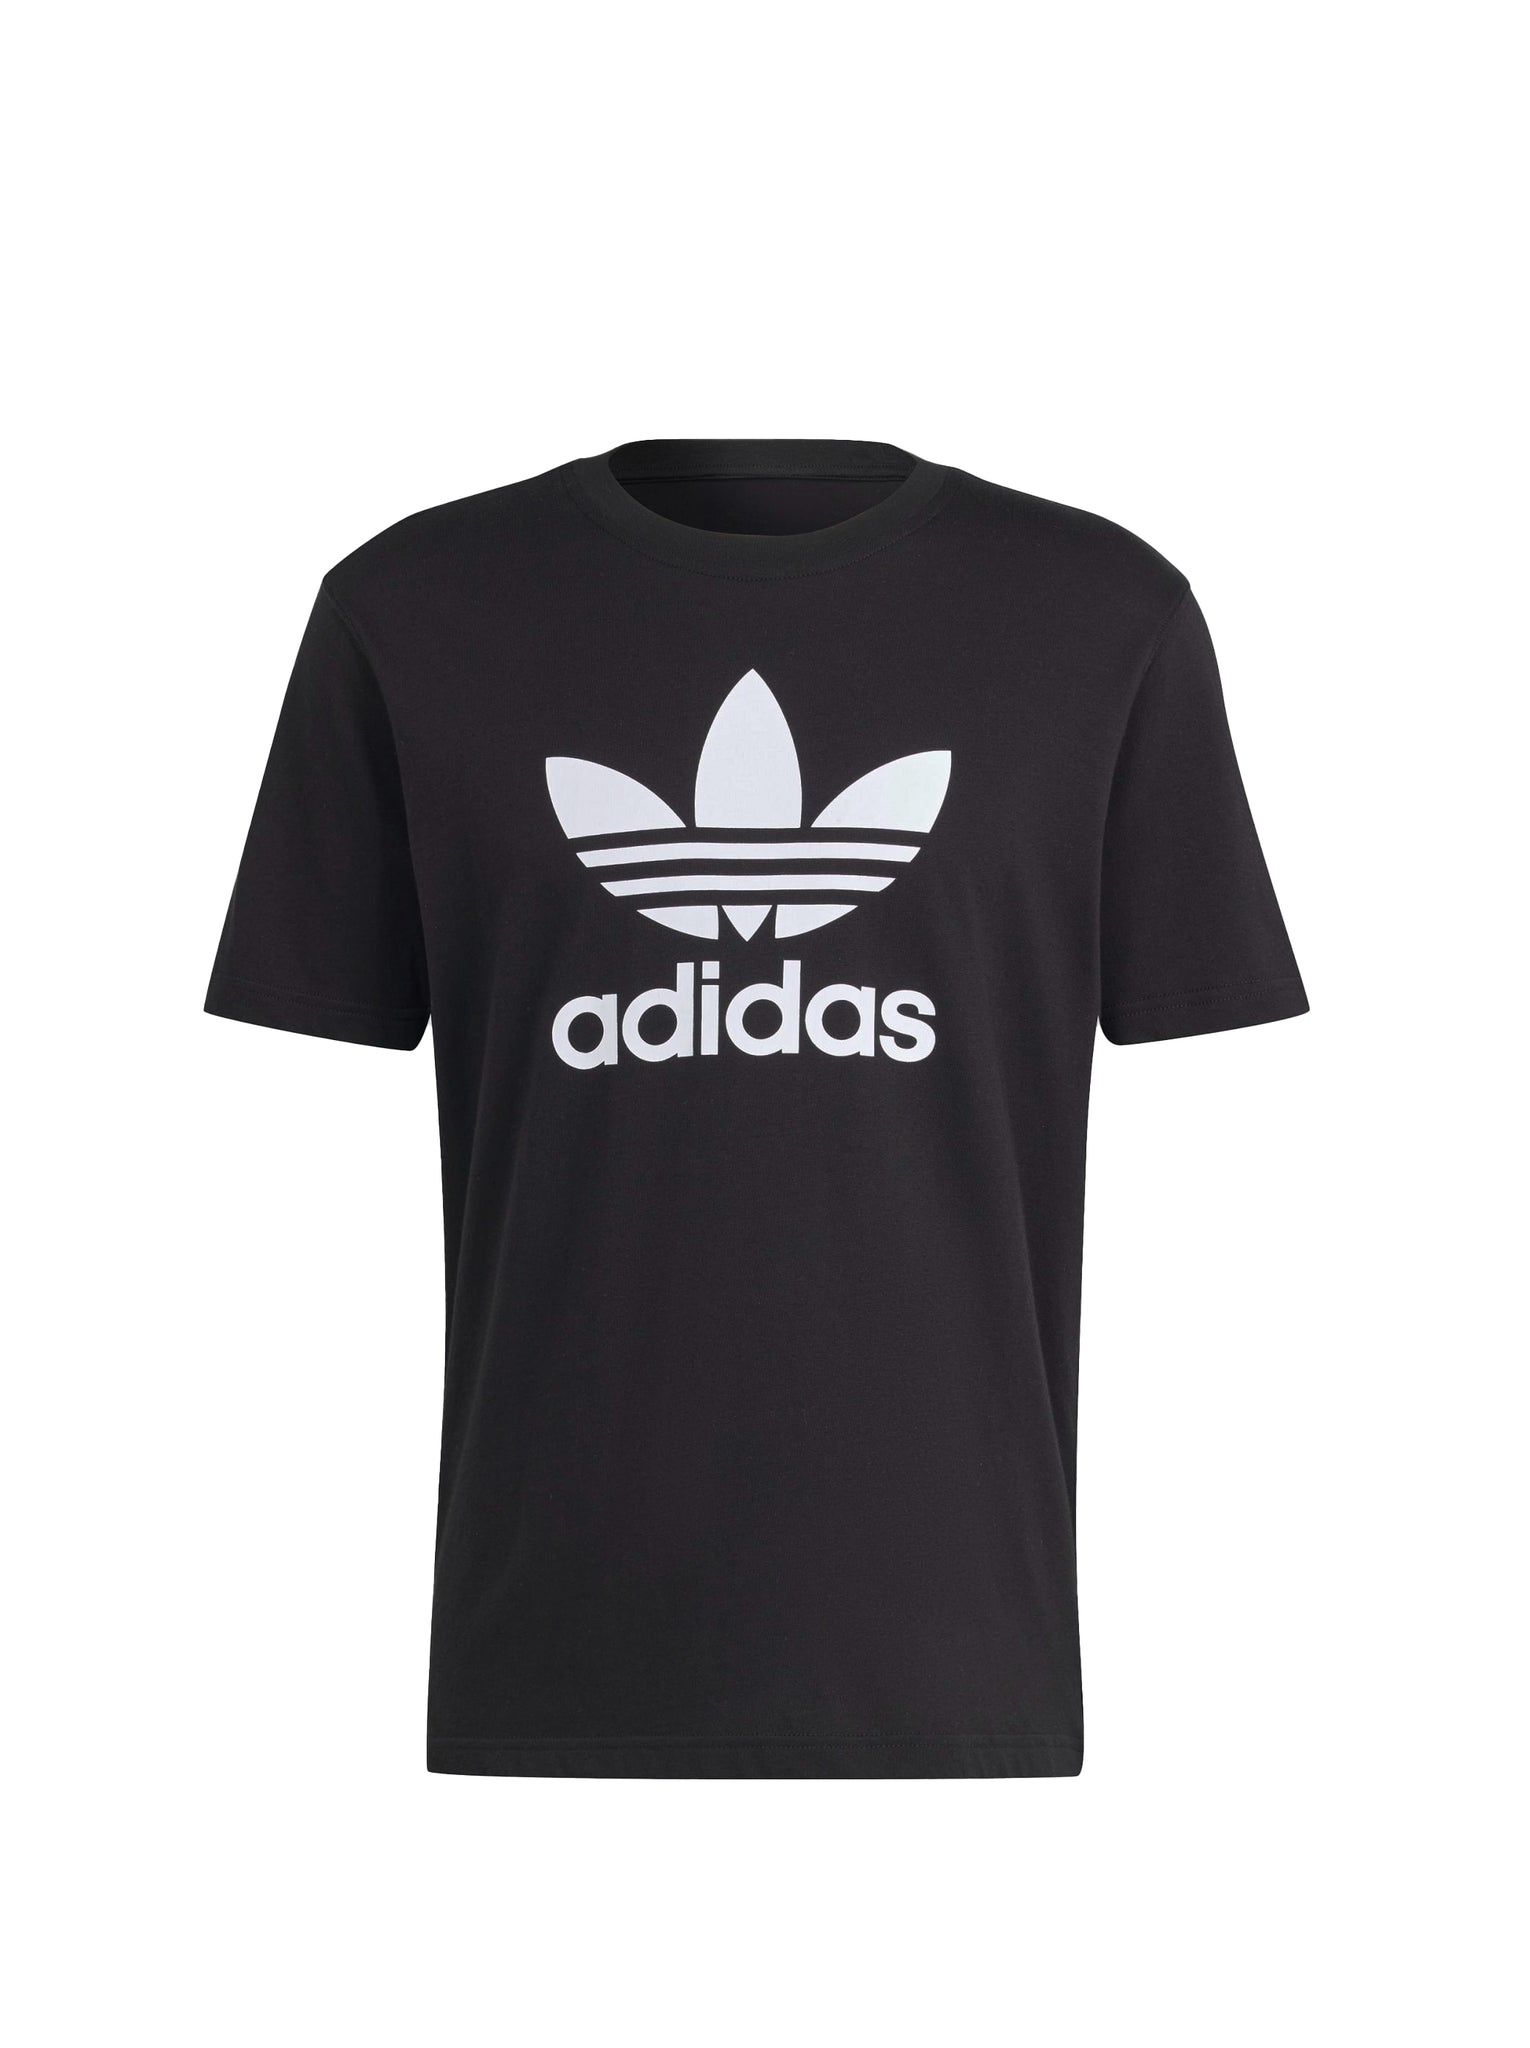 Adidas Trefoil Black Men's T-Shirt